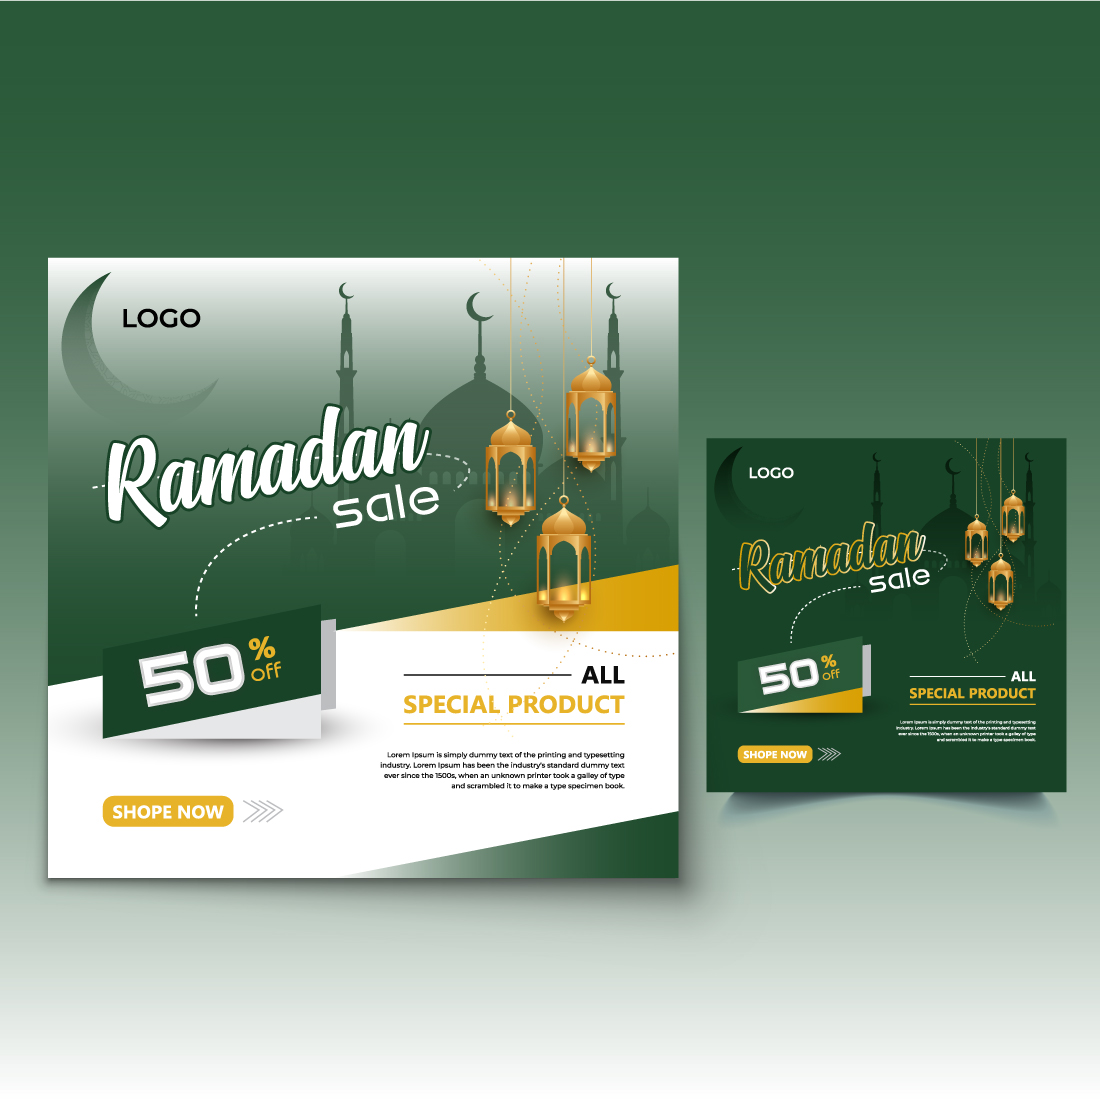 Ramadan sale social media post template Featureg preview image.